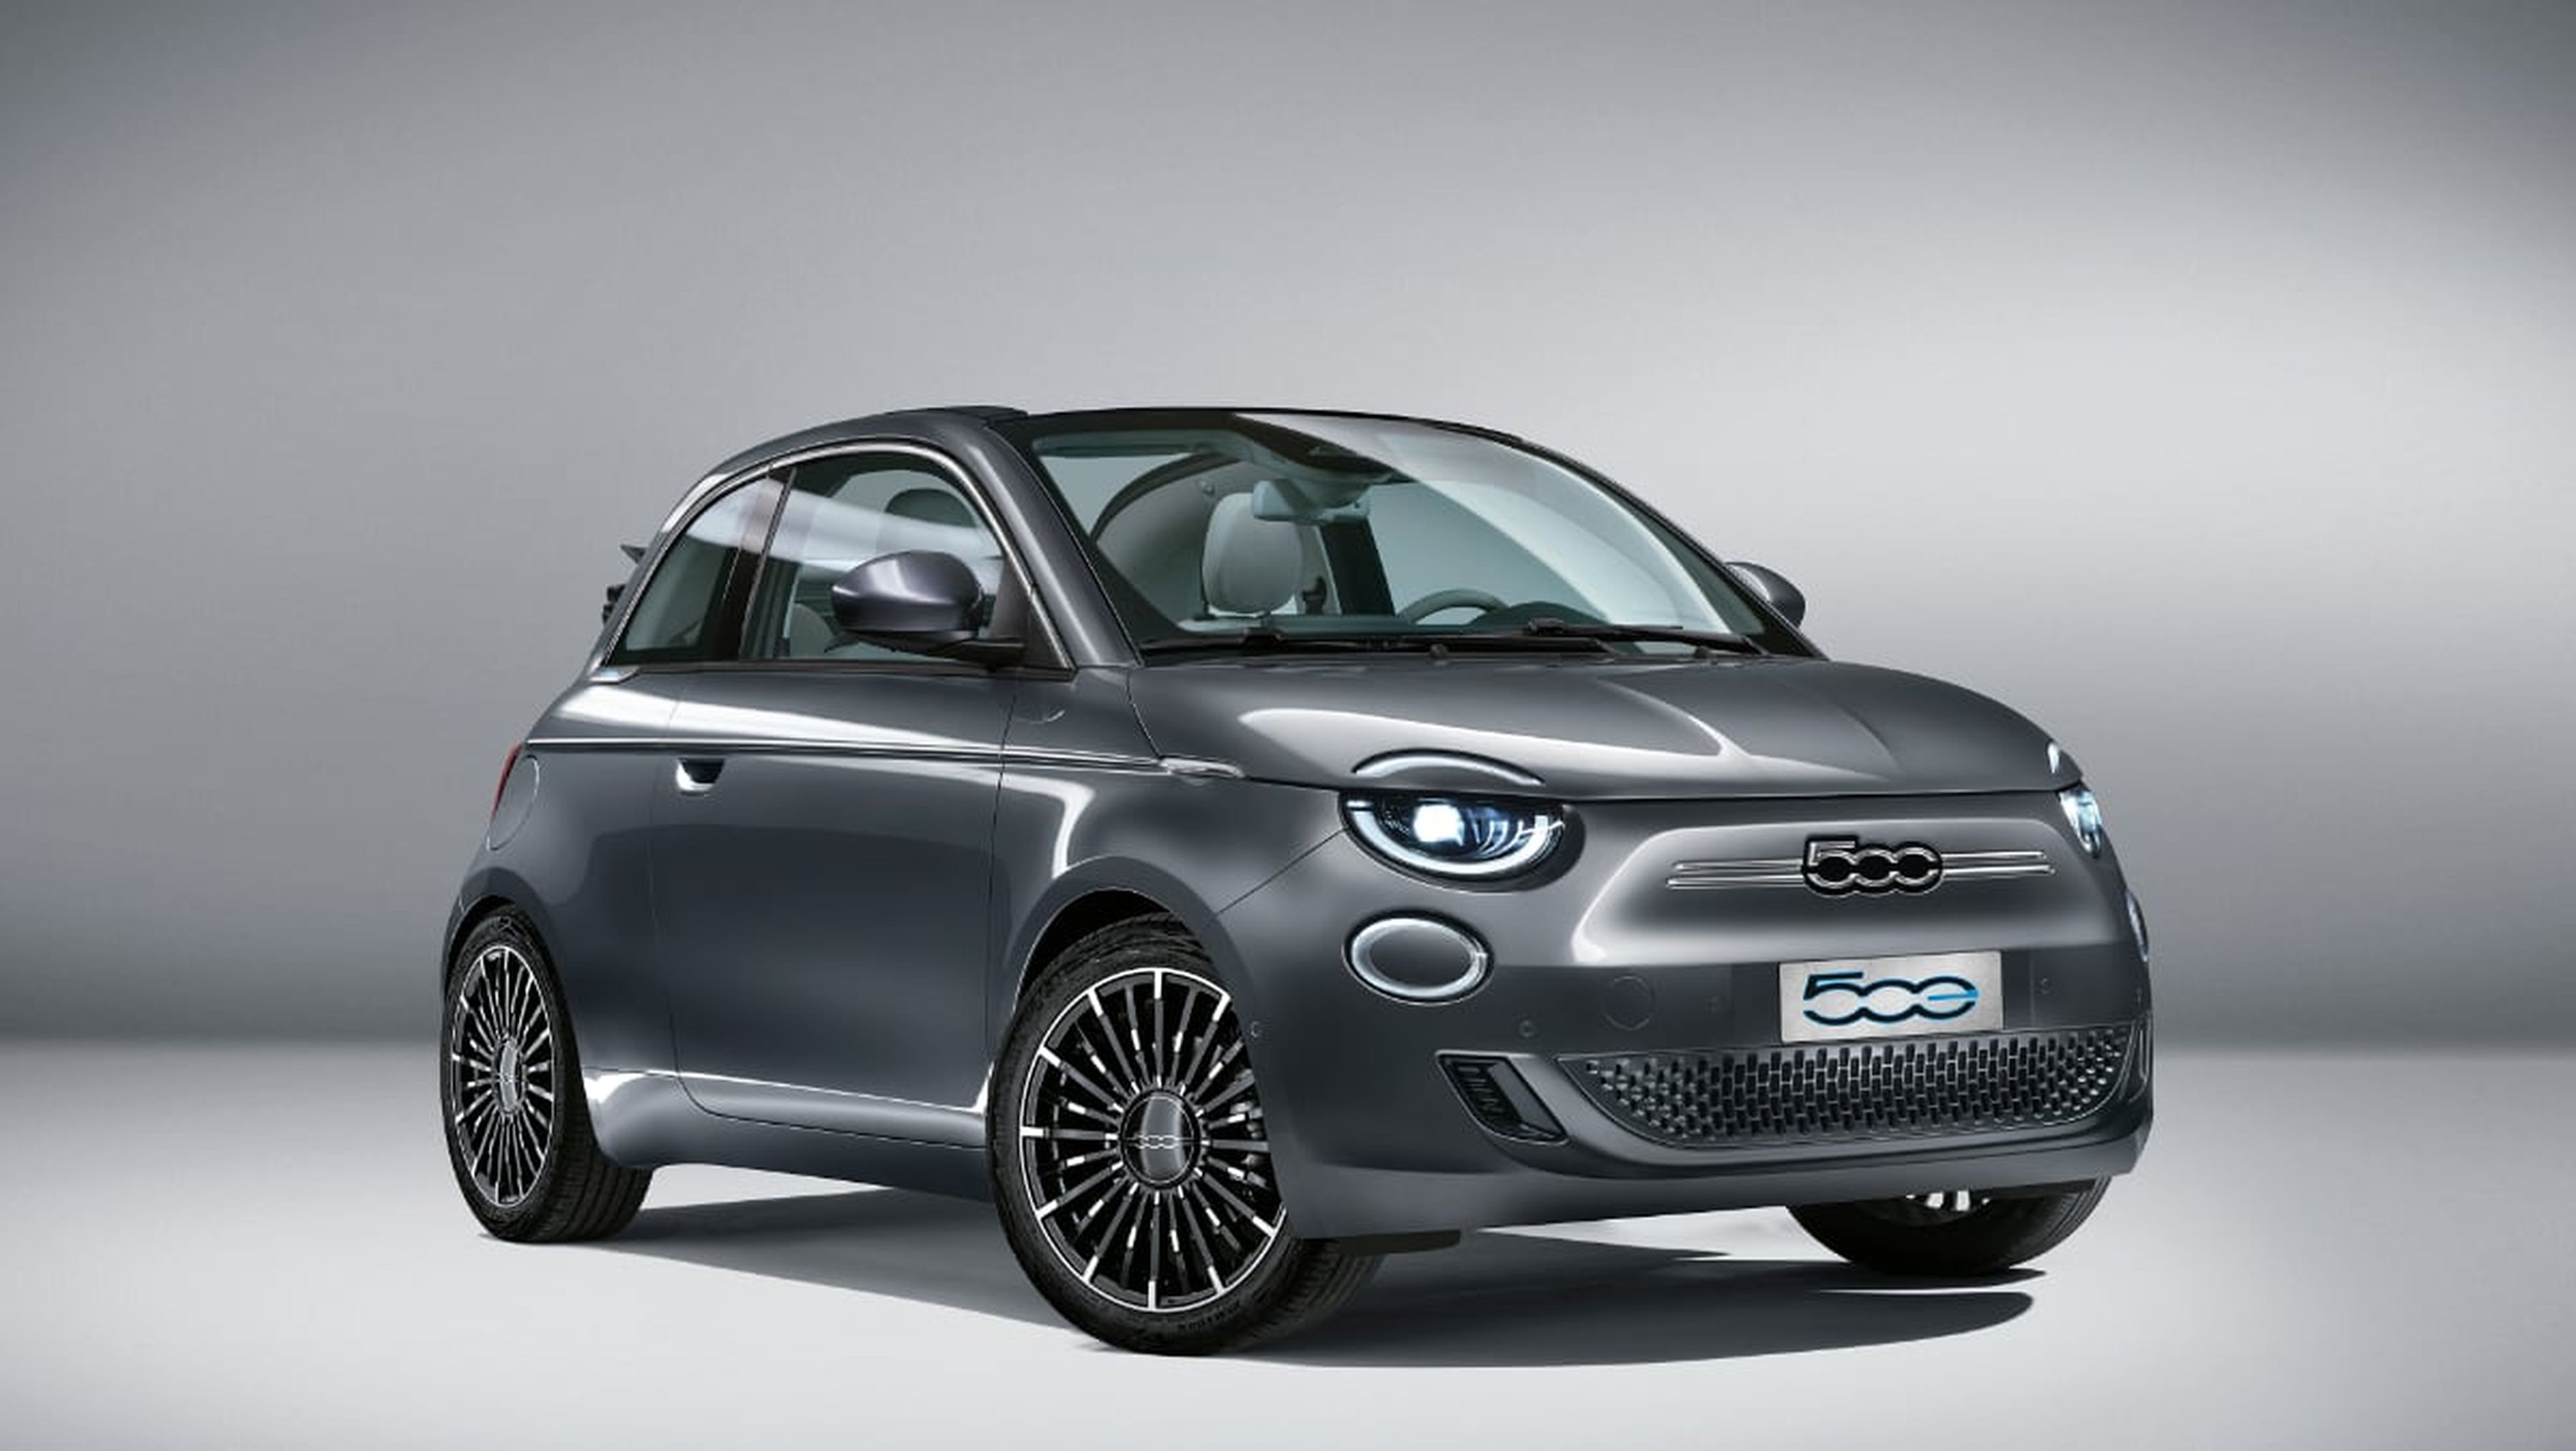 Nuevo Fiat 500 2020